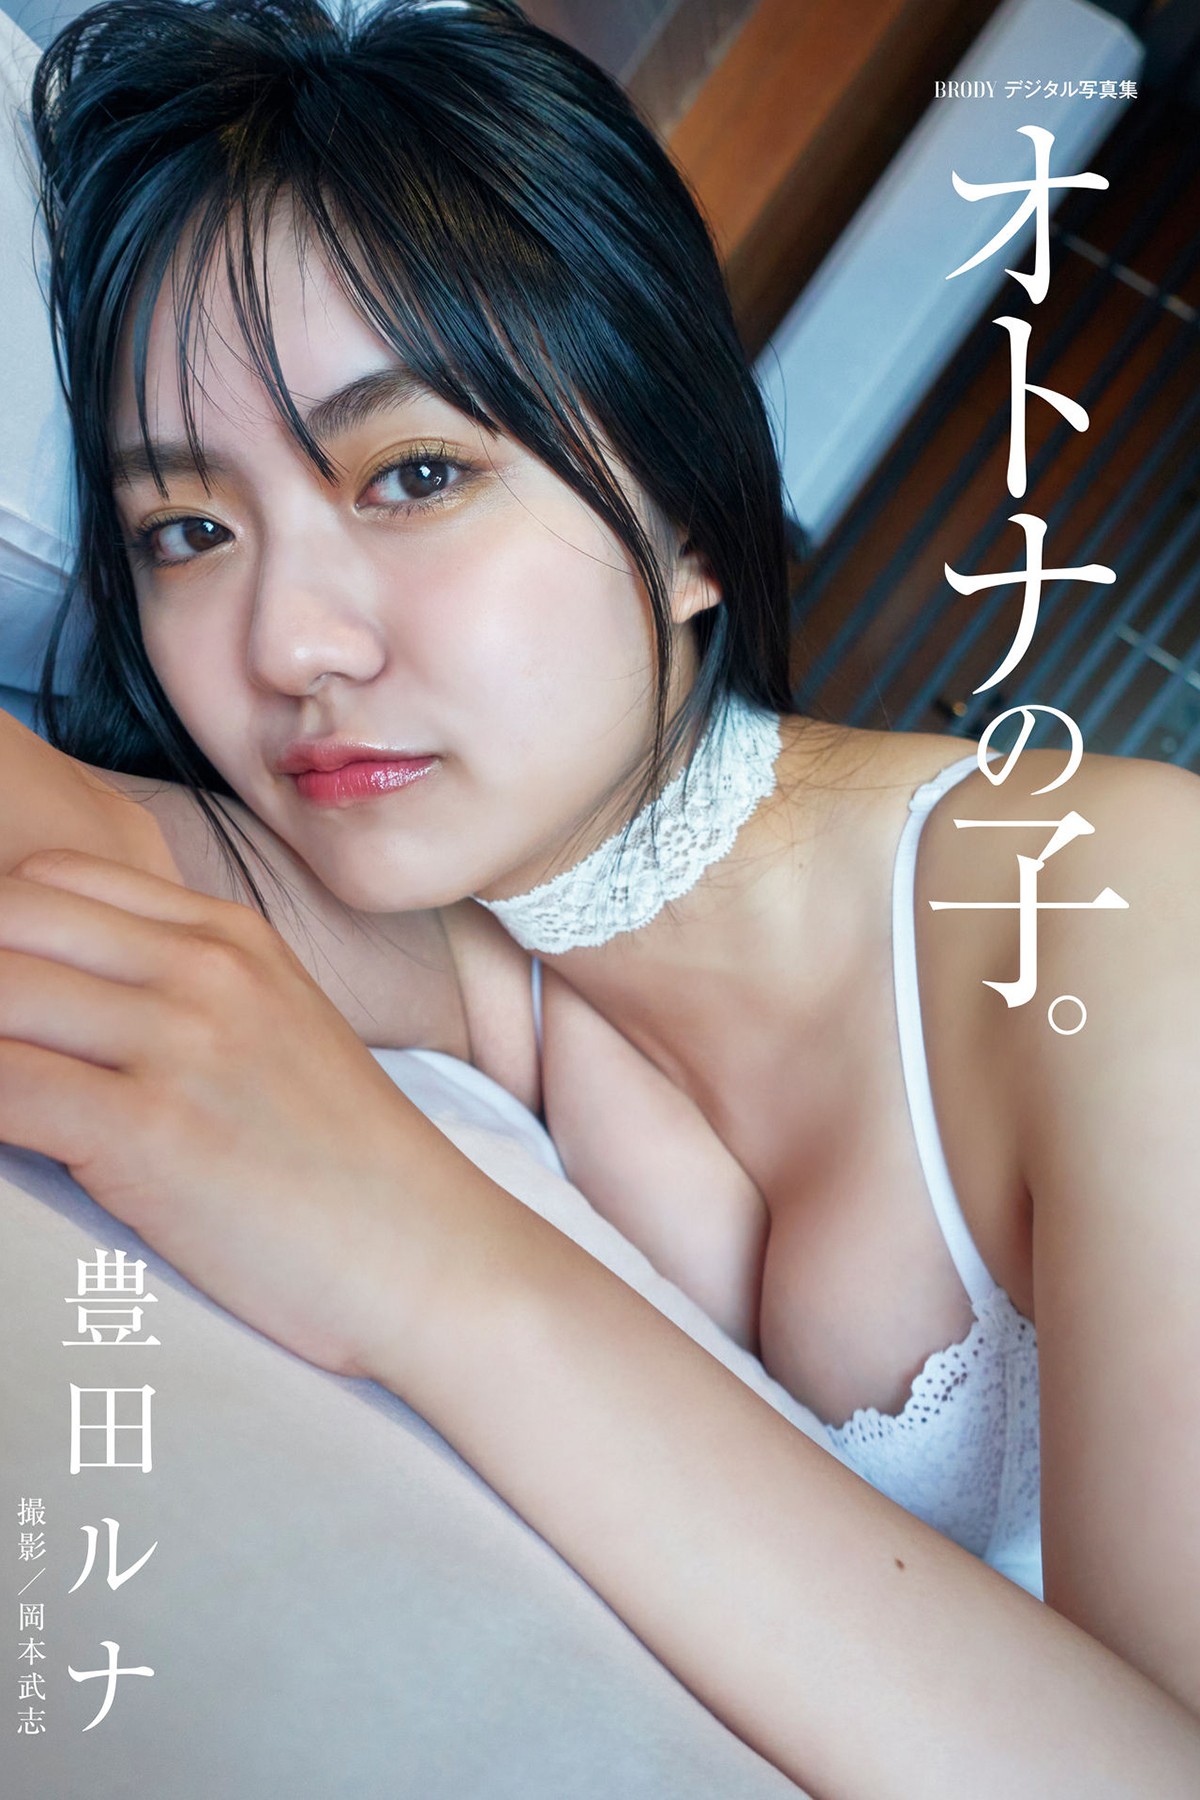 BRODY Photobook 2021-07-31 Runa Toyoda 豊田ルナ – An Adult Child